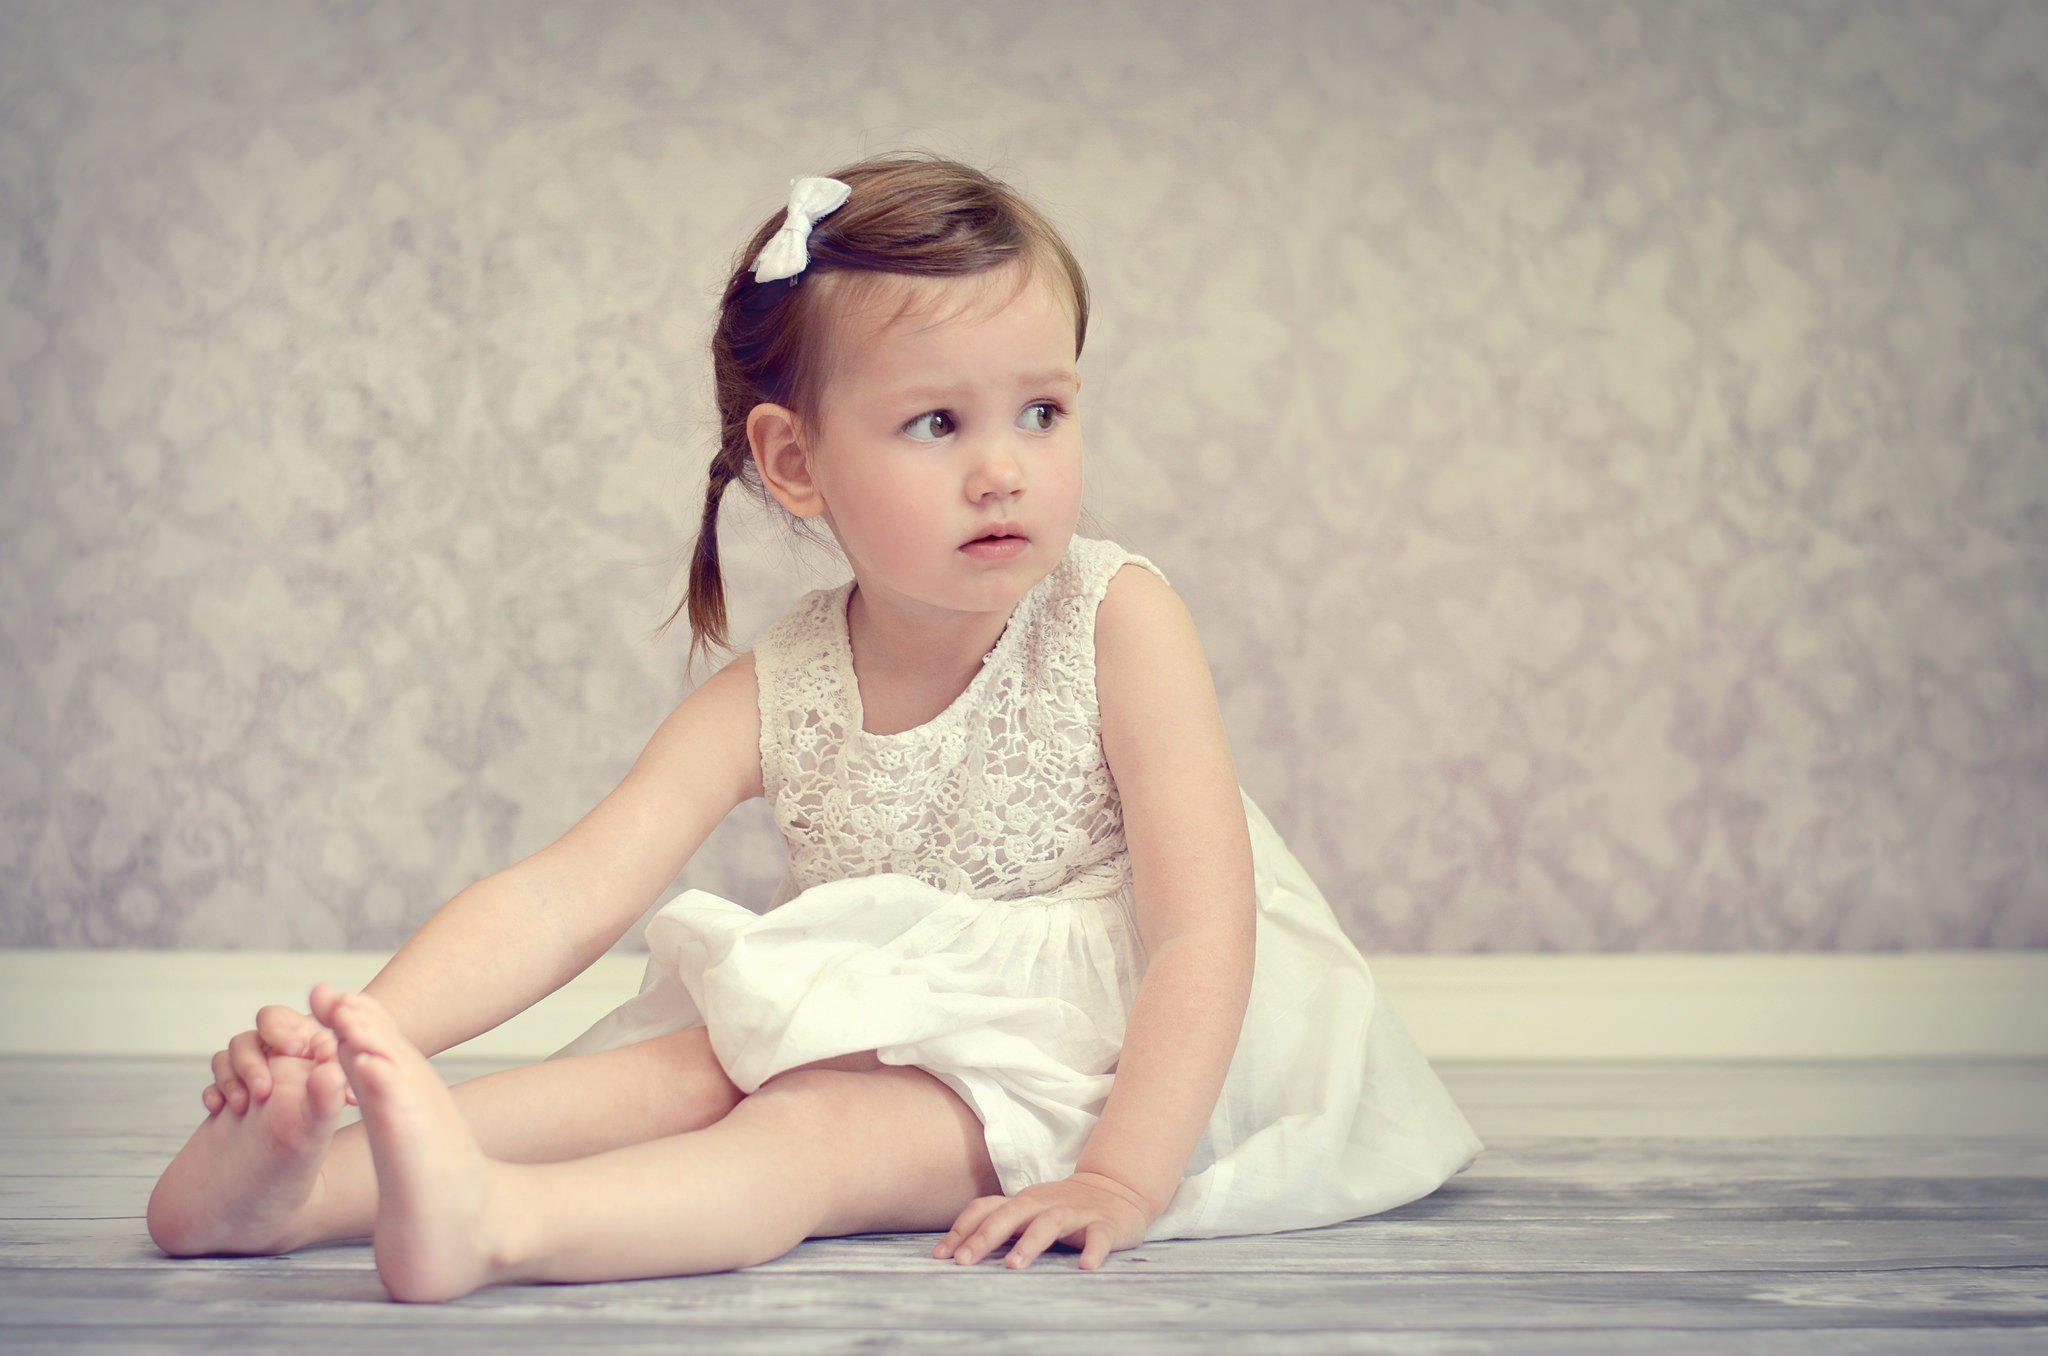 Mood Girl Dress Baby Floor Sitting Barefoot High Resolution Image